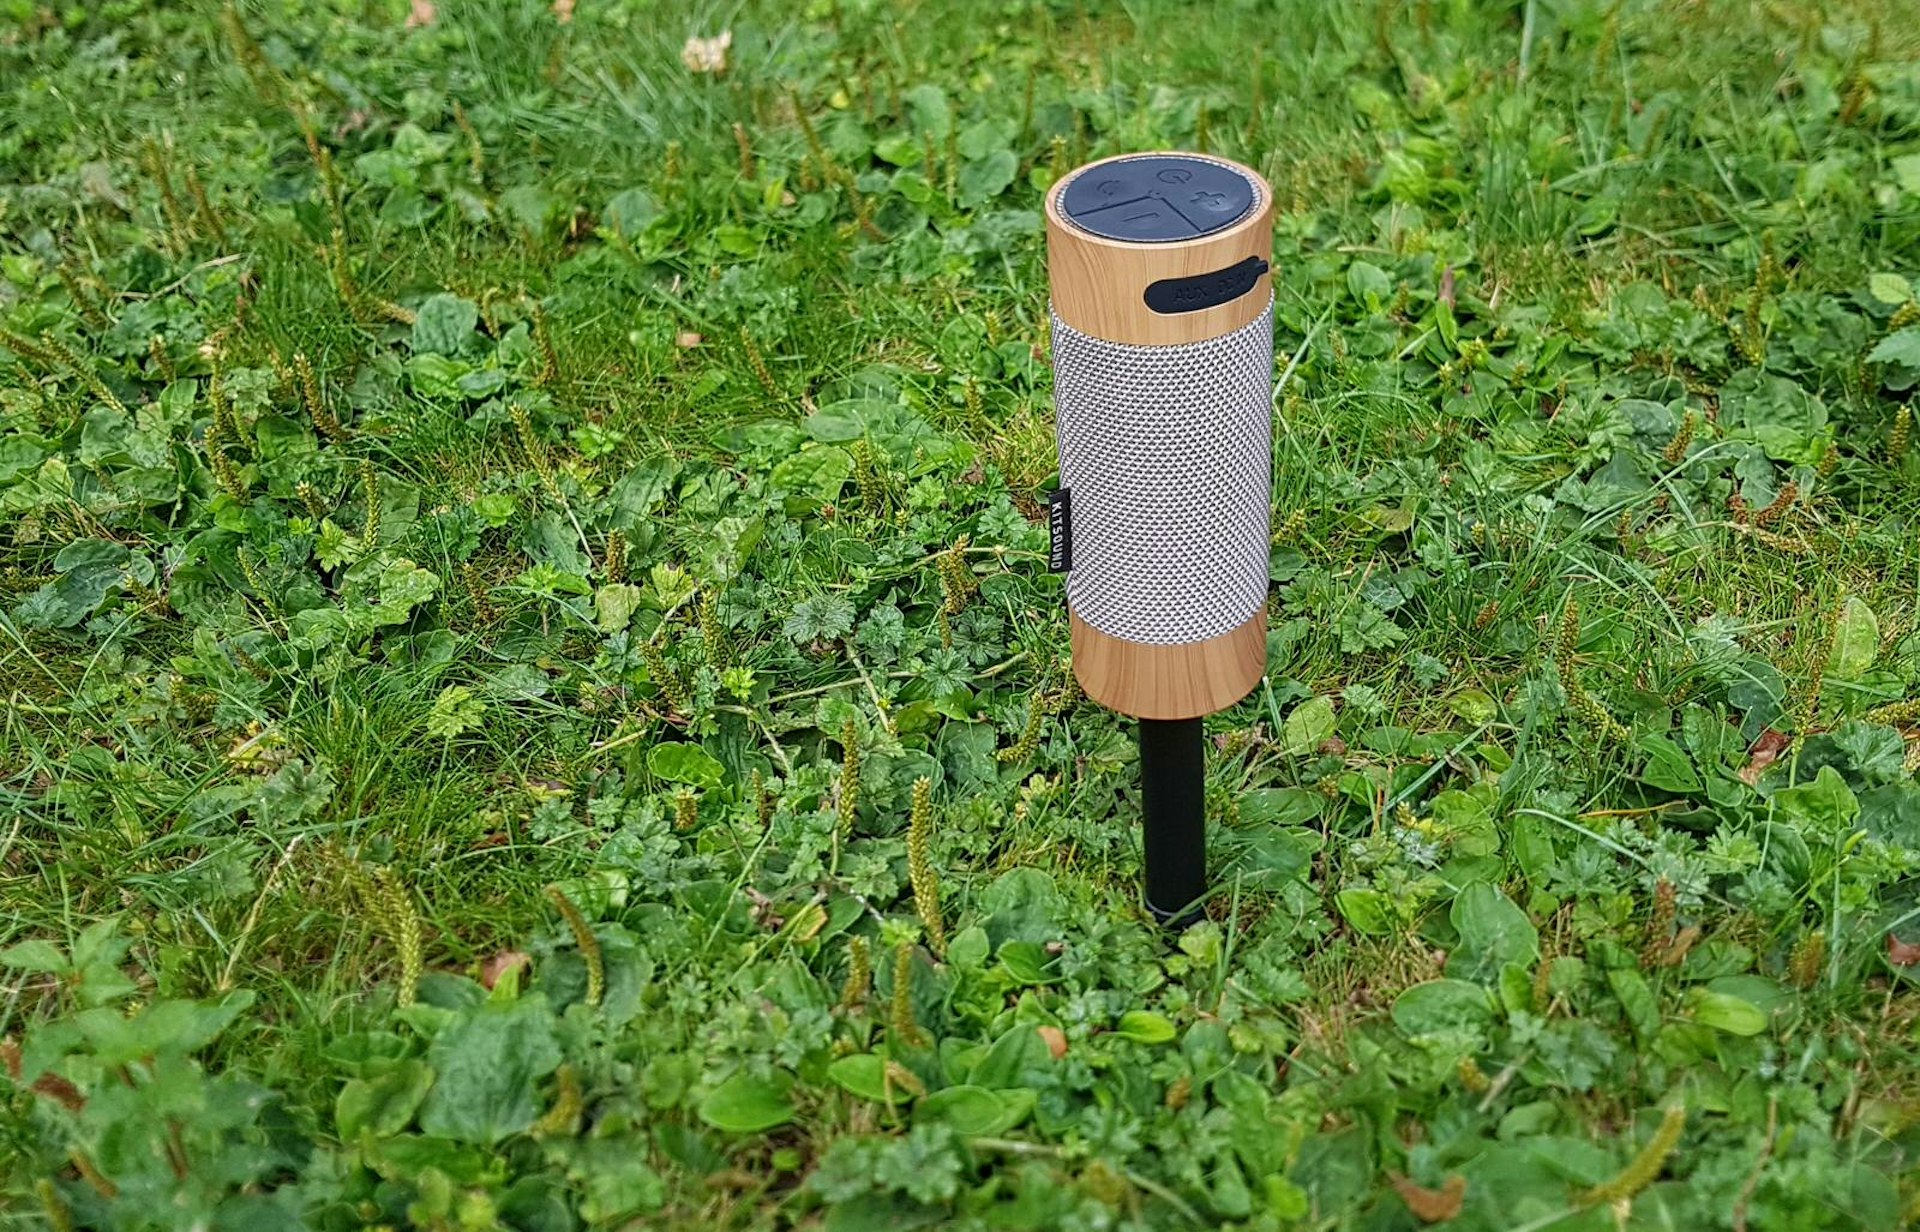 Kitsound Diggit outdoor speaker